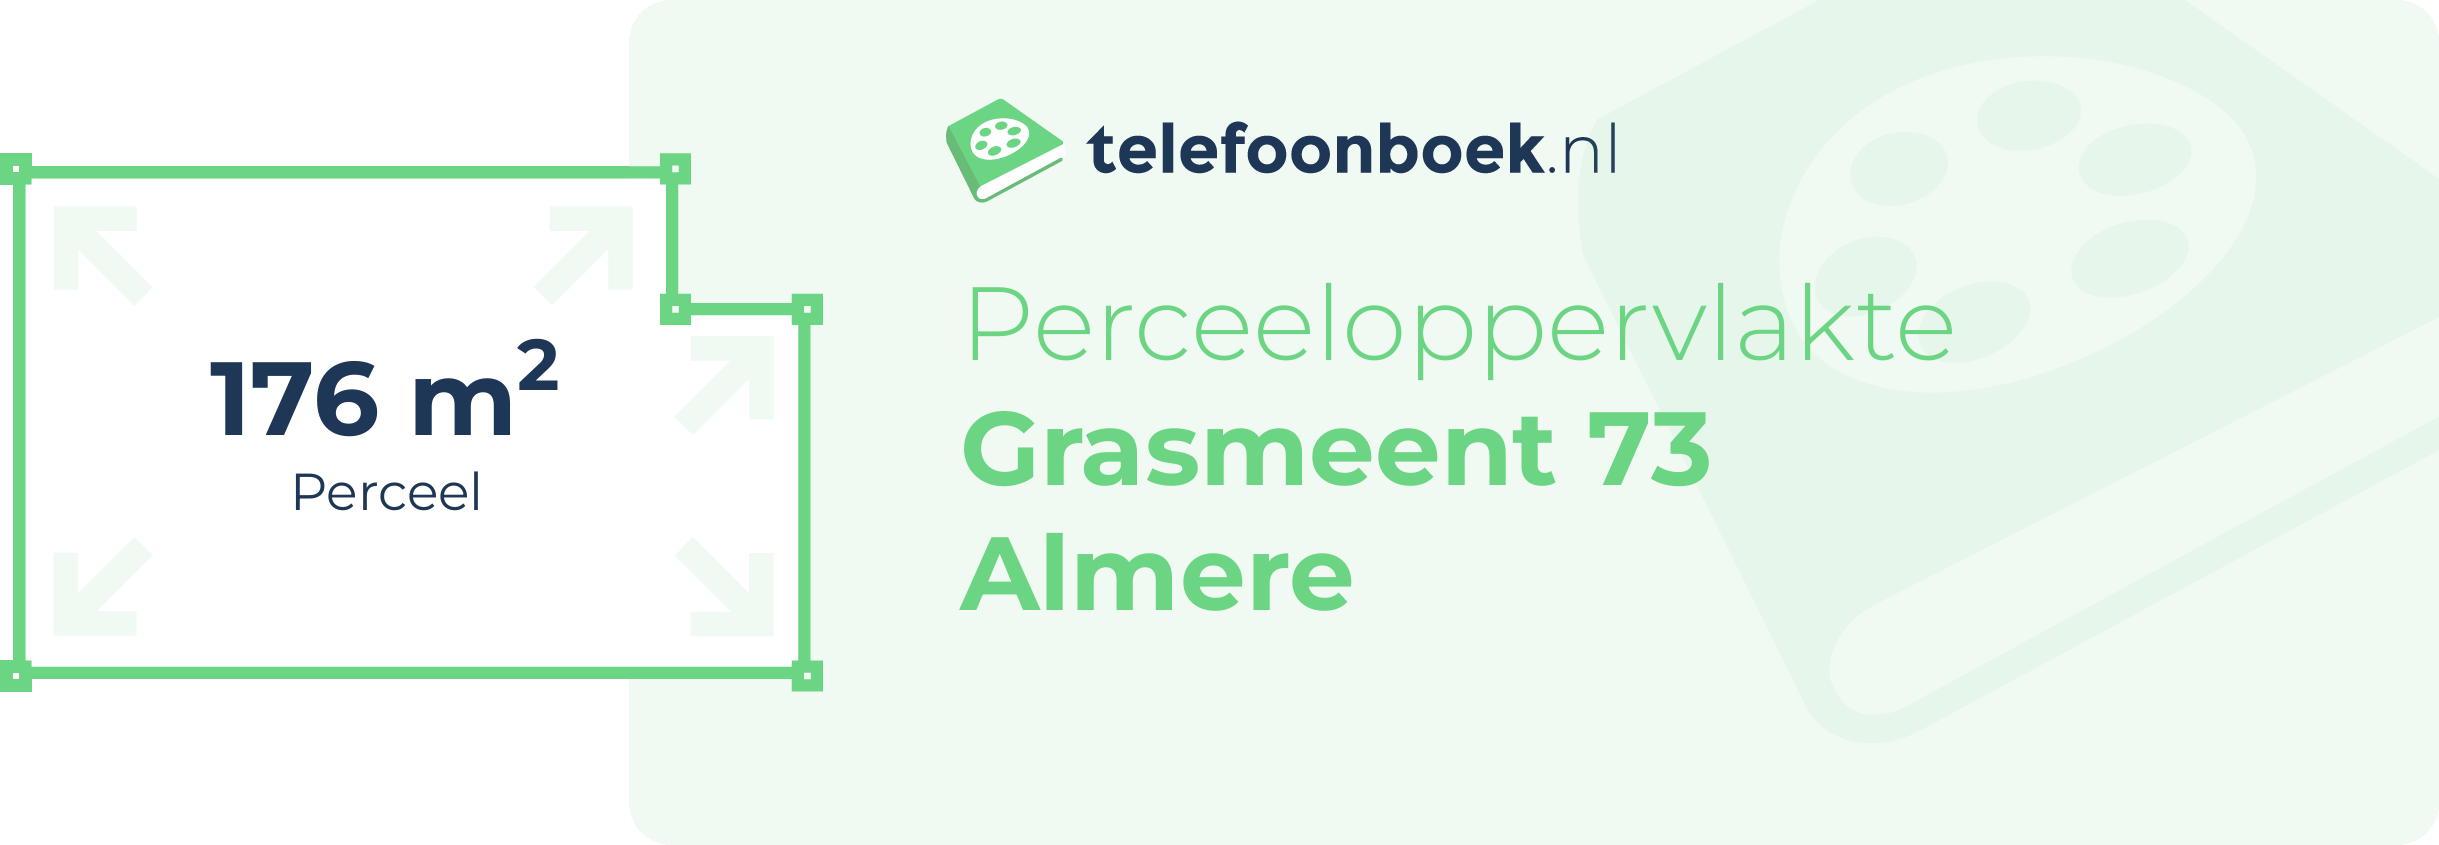 Perceeloppervlakte Grasmeent 73 Almere